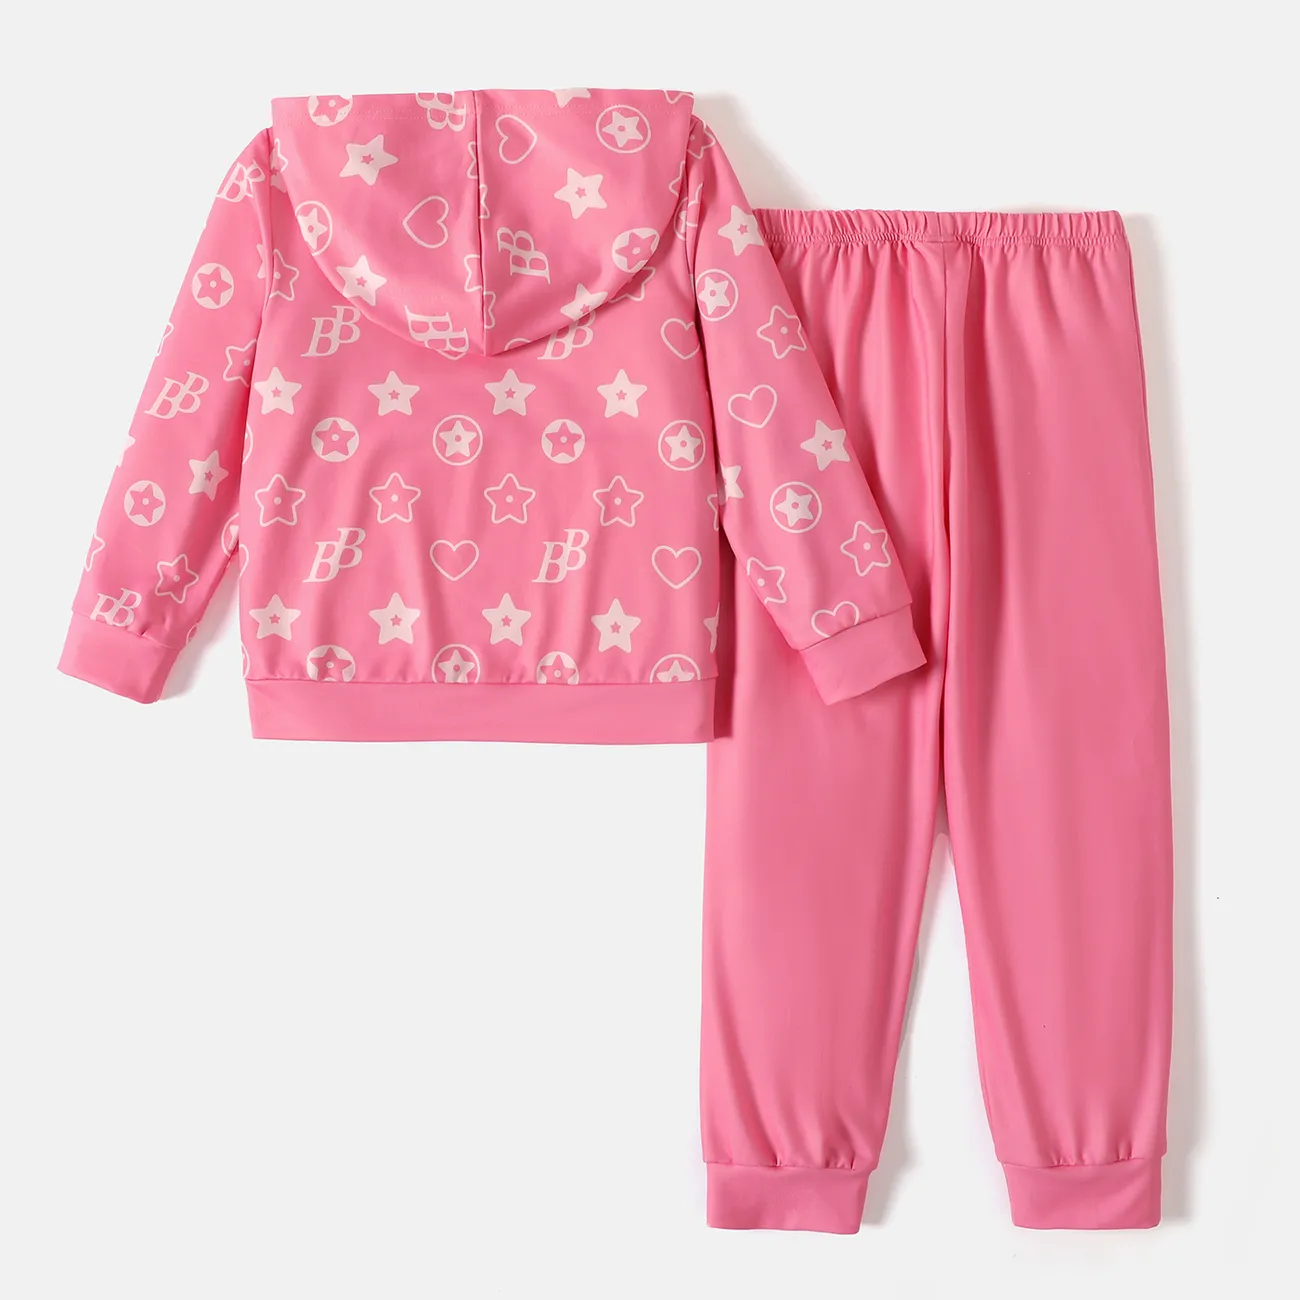 L.O.L. SURPRISE! 2pcs Kid Girl Character Stars Print Hoodie Sweatshirt and Pants Set Pink big image 1